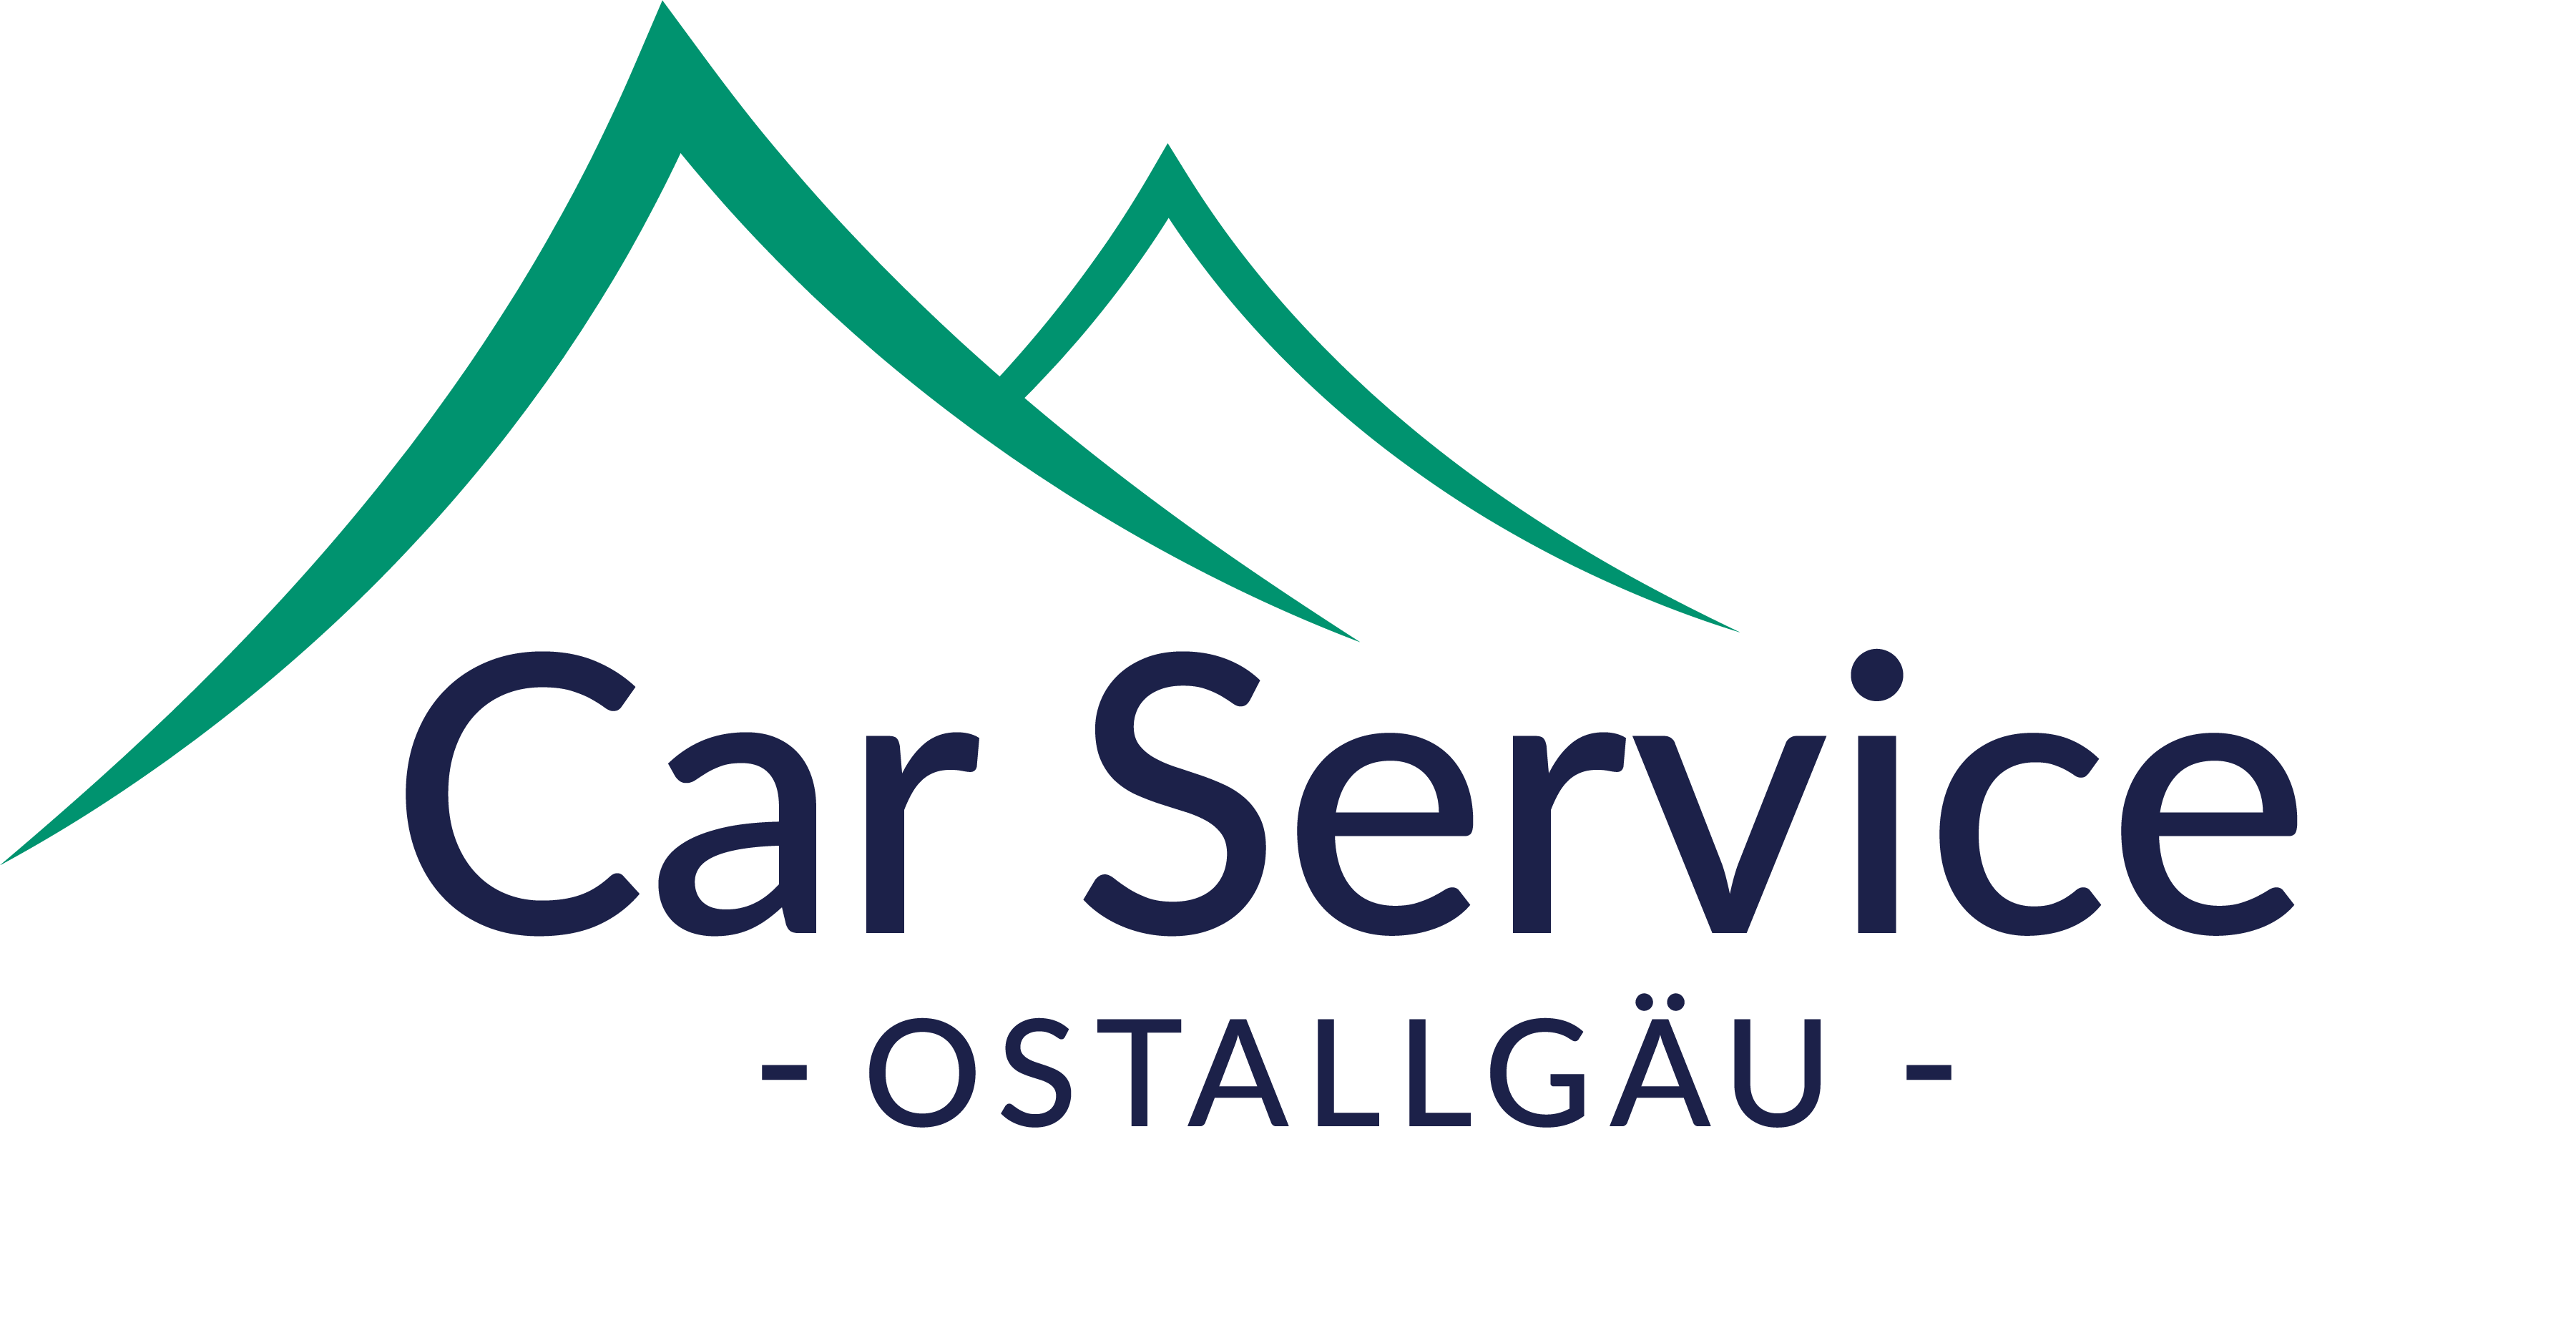 Car Service Ostalgau